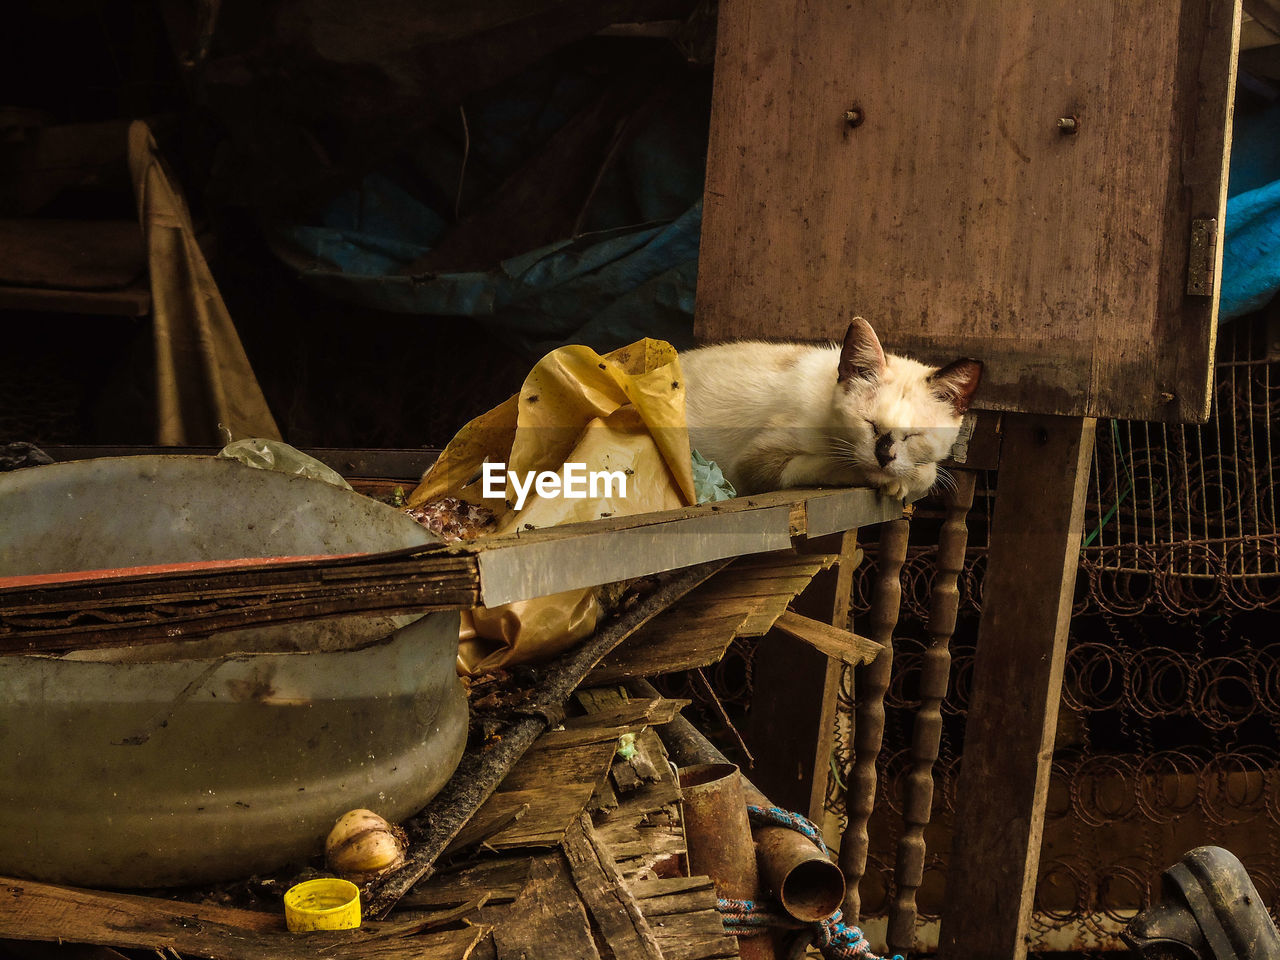 A cat sleeping in a dump